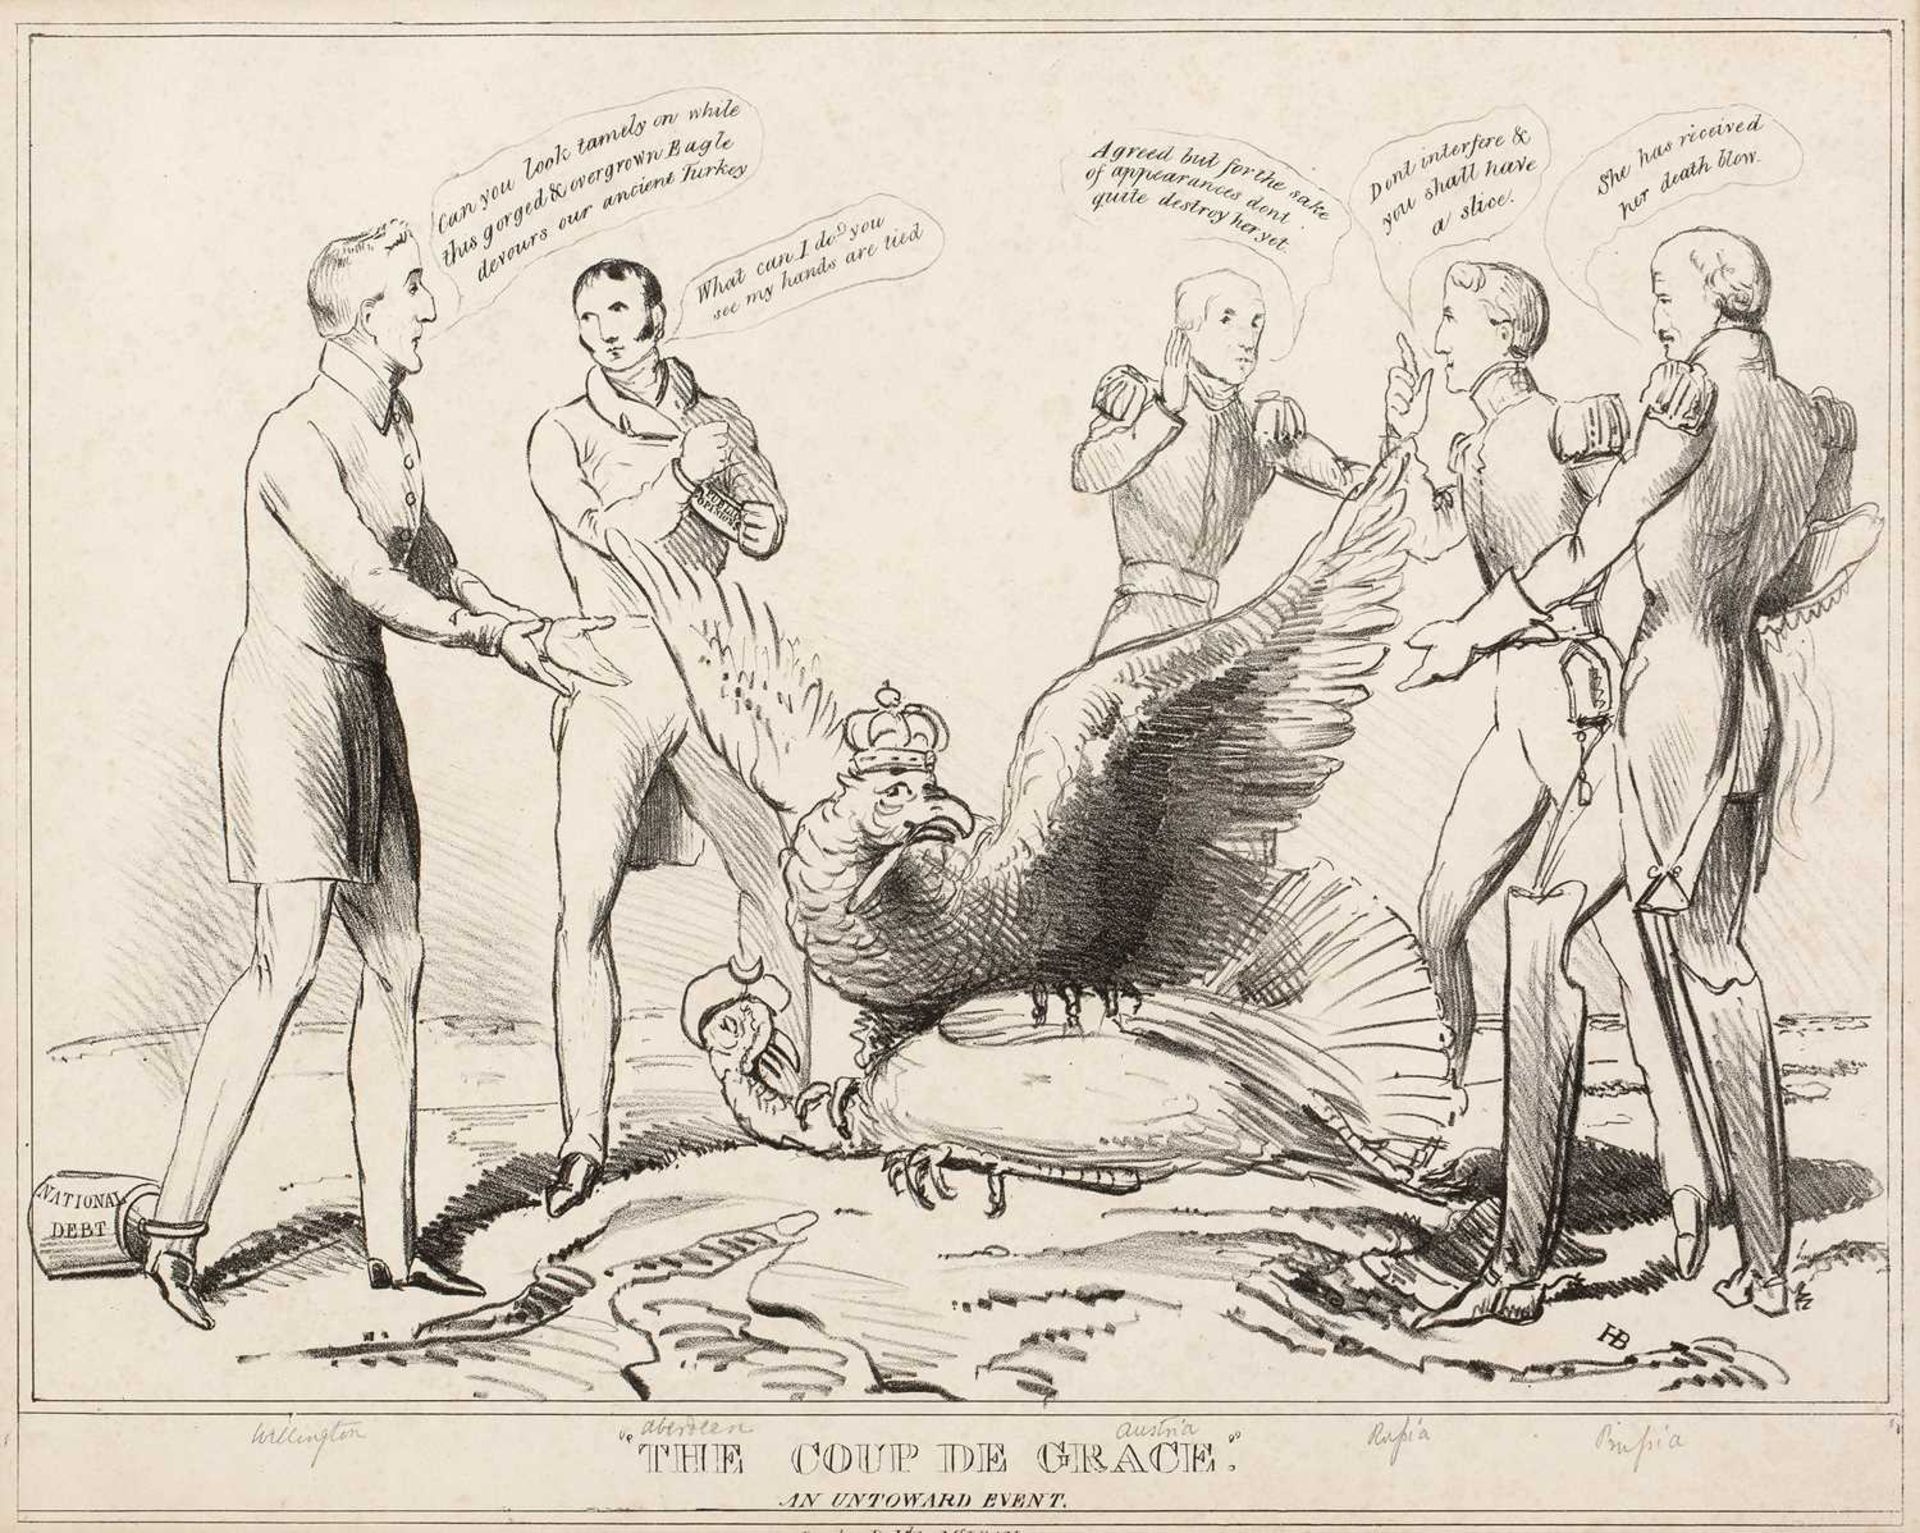 John Doyle 'The Coup de Grace - An Untoward Event', lithograph, Thomas Maclean (pubs), 29.5 x 34.